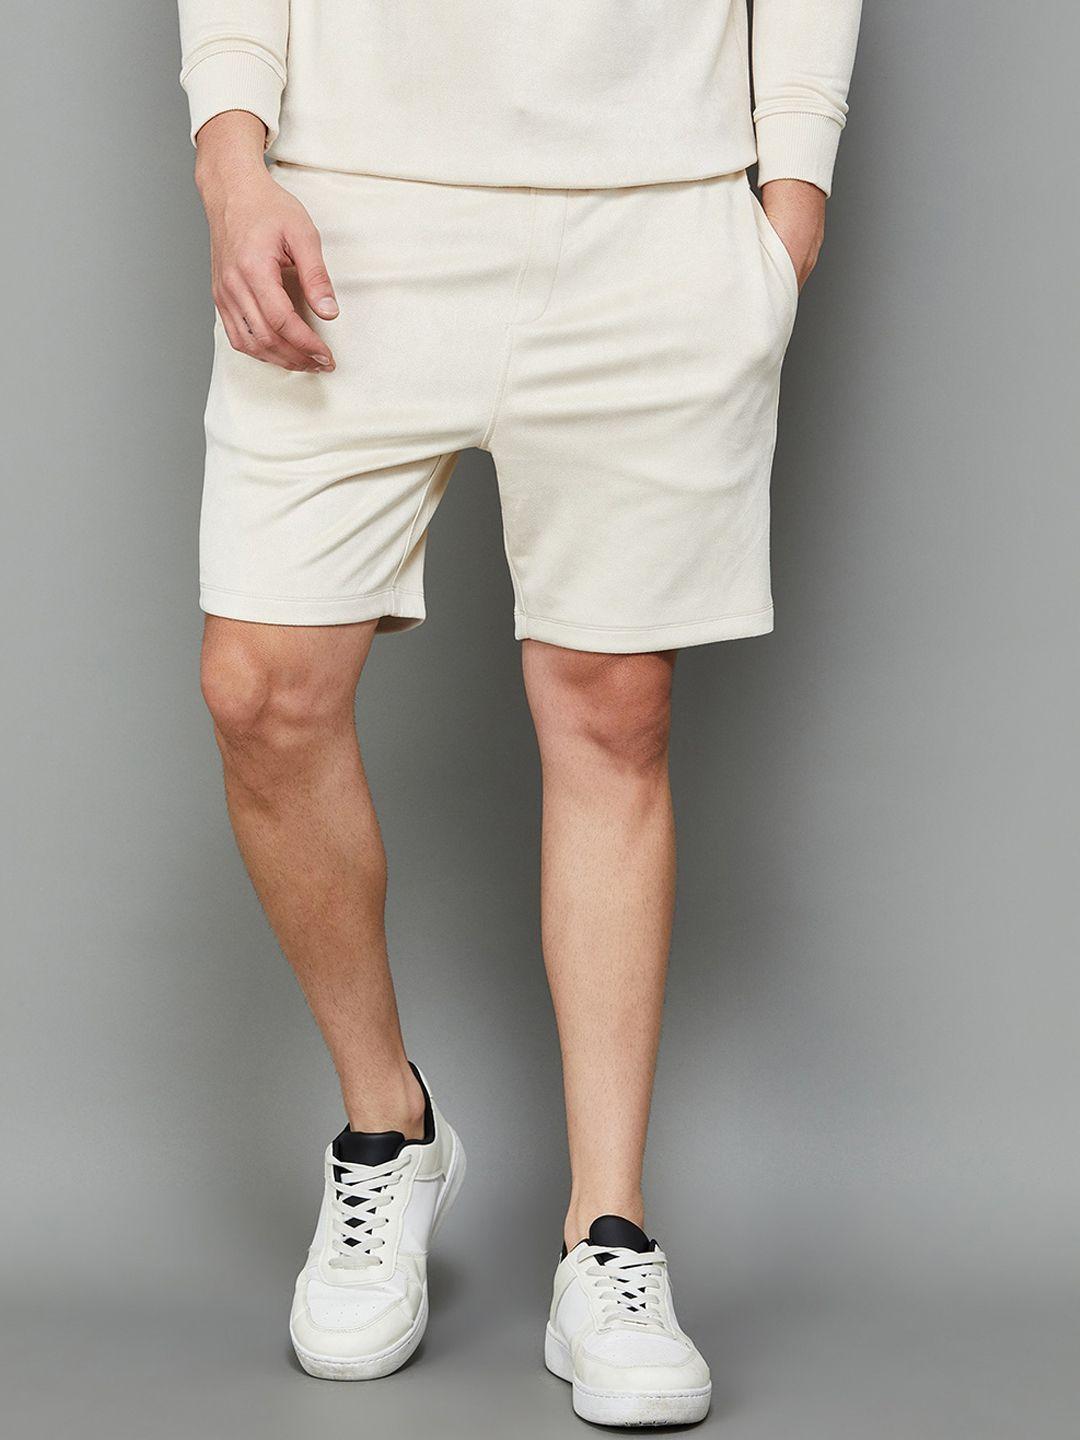 bossini-men-mid-rise-regular-shorts